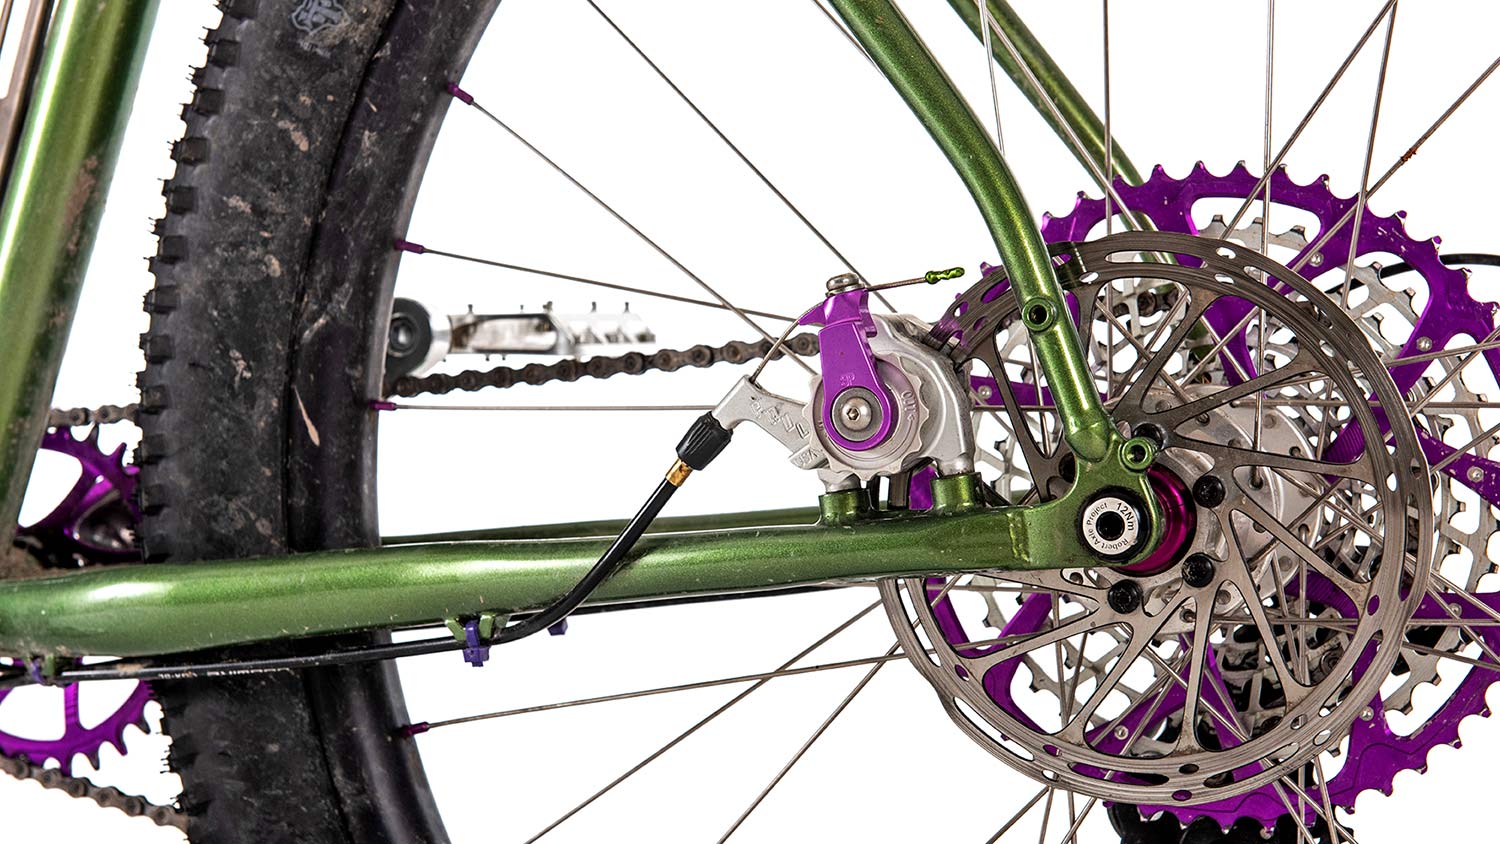 Tanglefoot Moonshiner MTB, 27.5+ rigid steel dropbar adventure touring bikepacking mountain bike, disc brakes